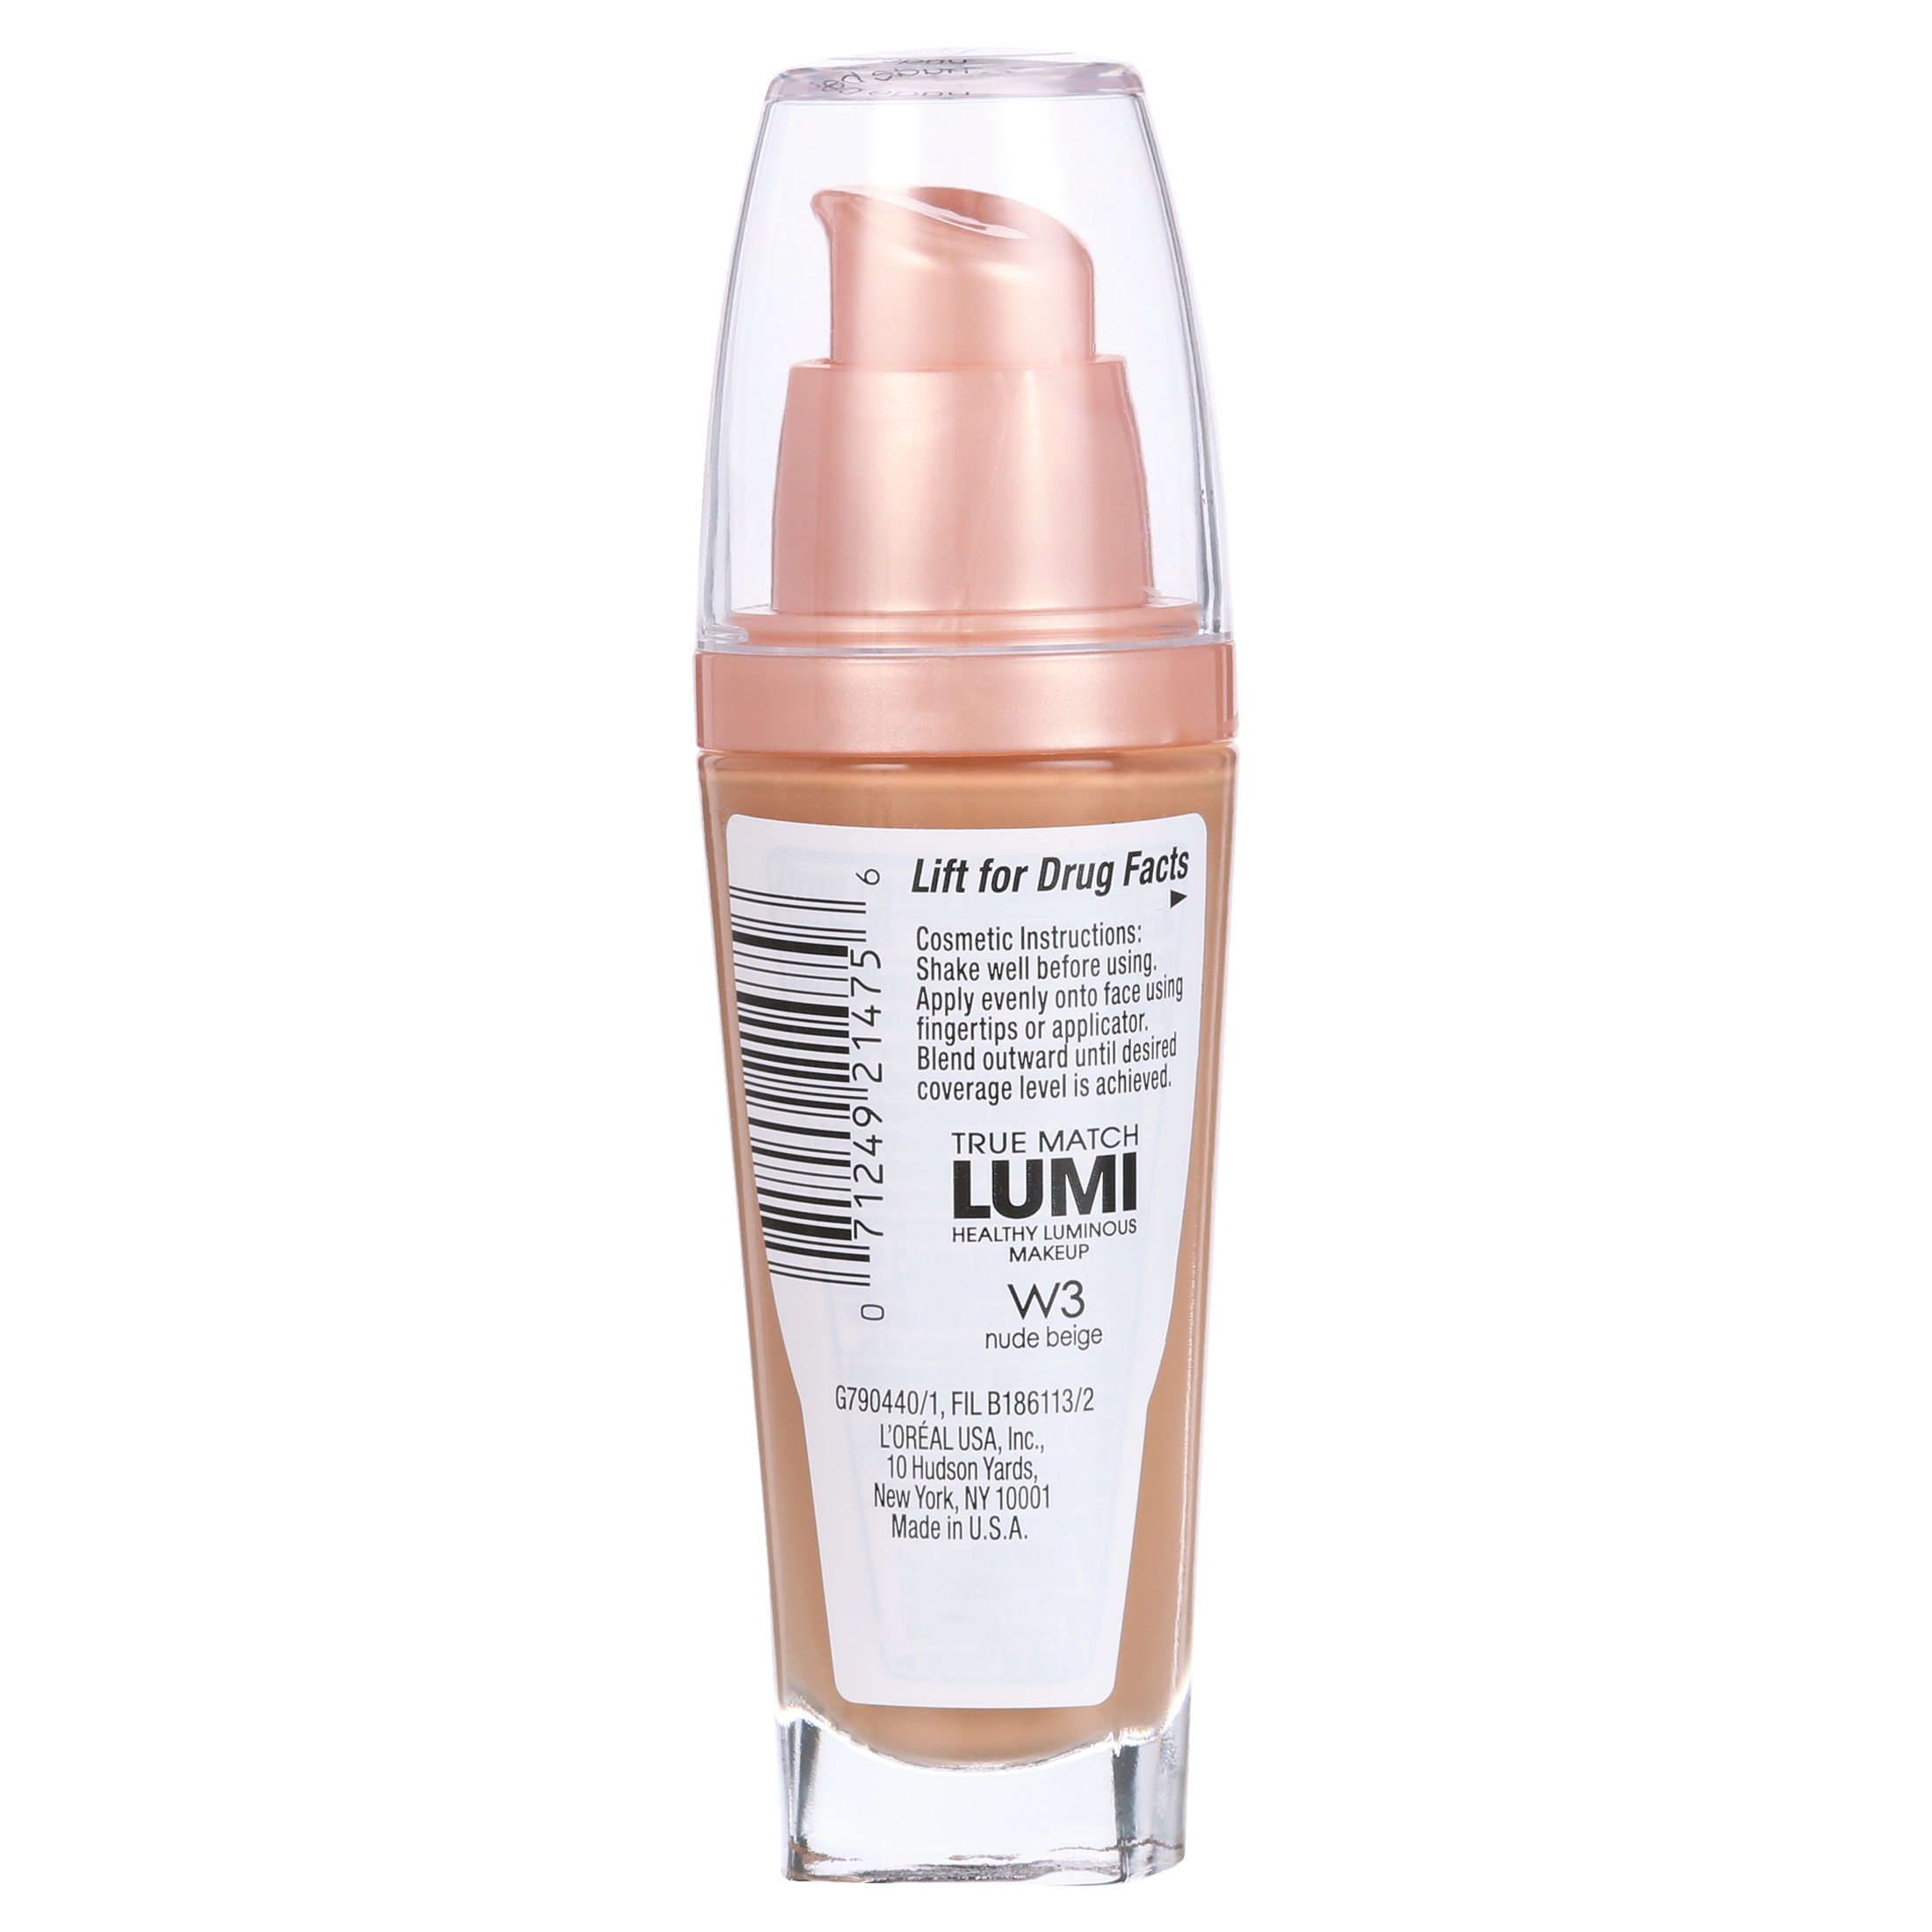 L'Oreal Paris True Match Lumi Liquid Foundation Makeup, W3 Nude Beige, 1 fl oz - image 5 of 10